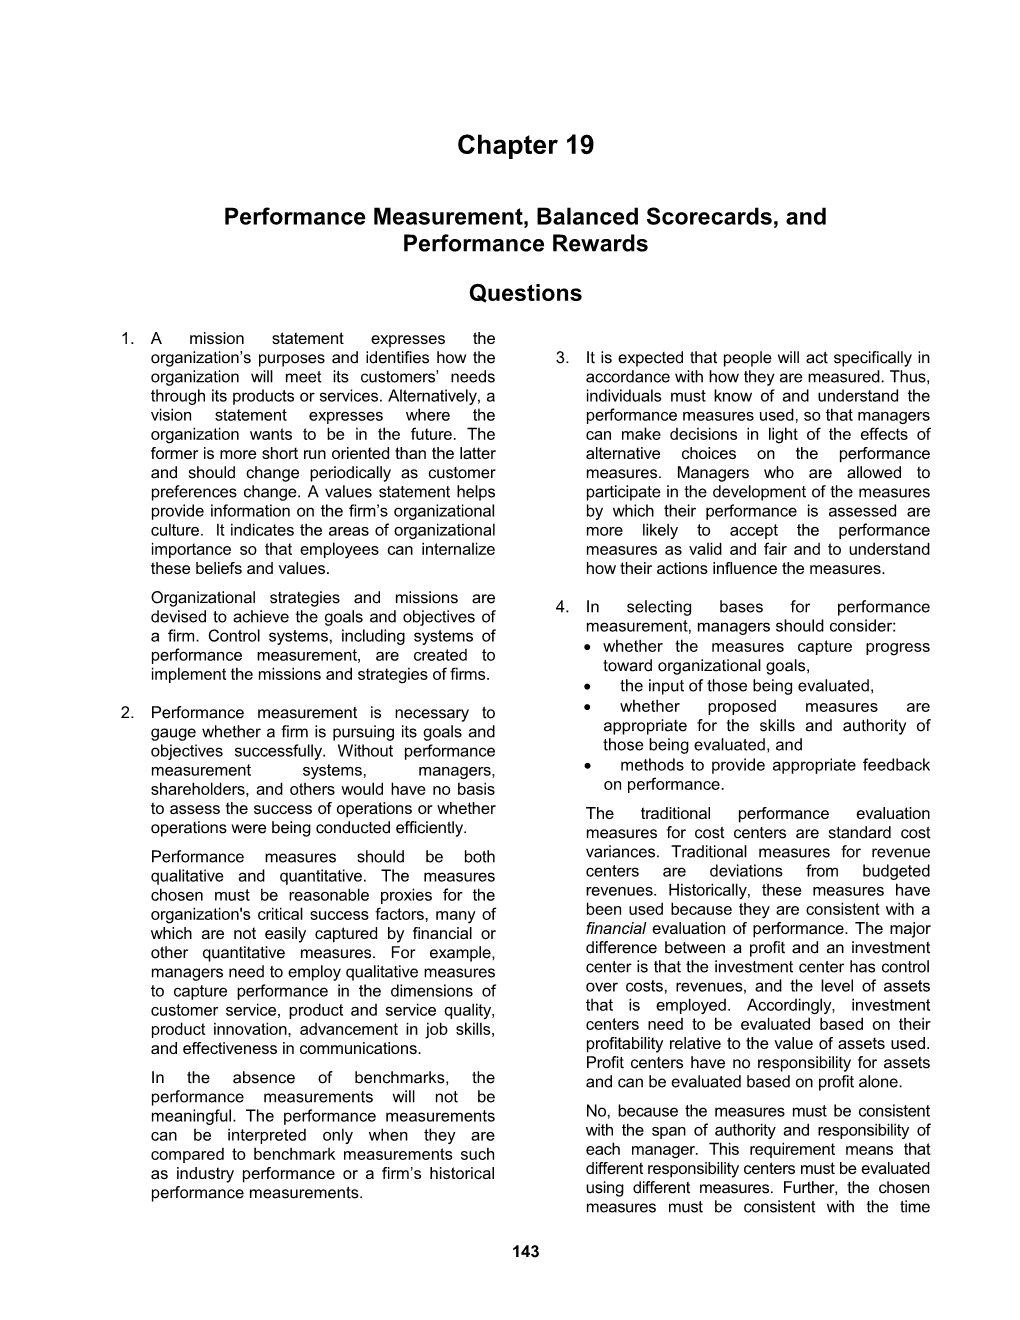 Performance Measurement, Balanced Scorecards, And